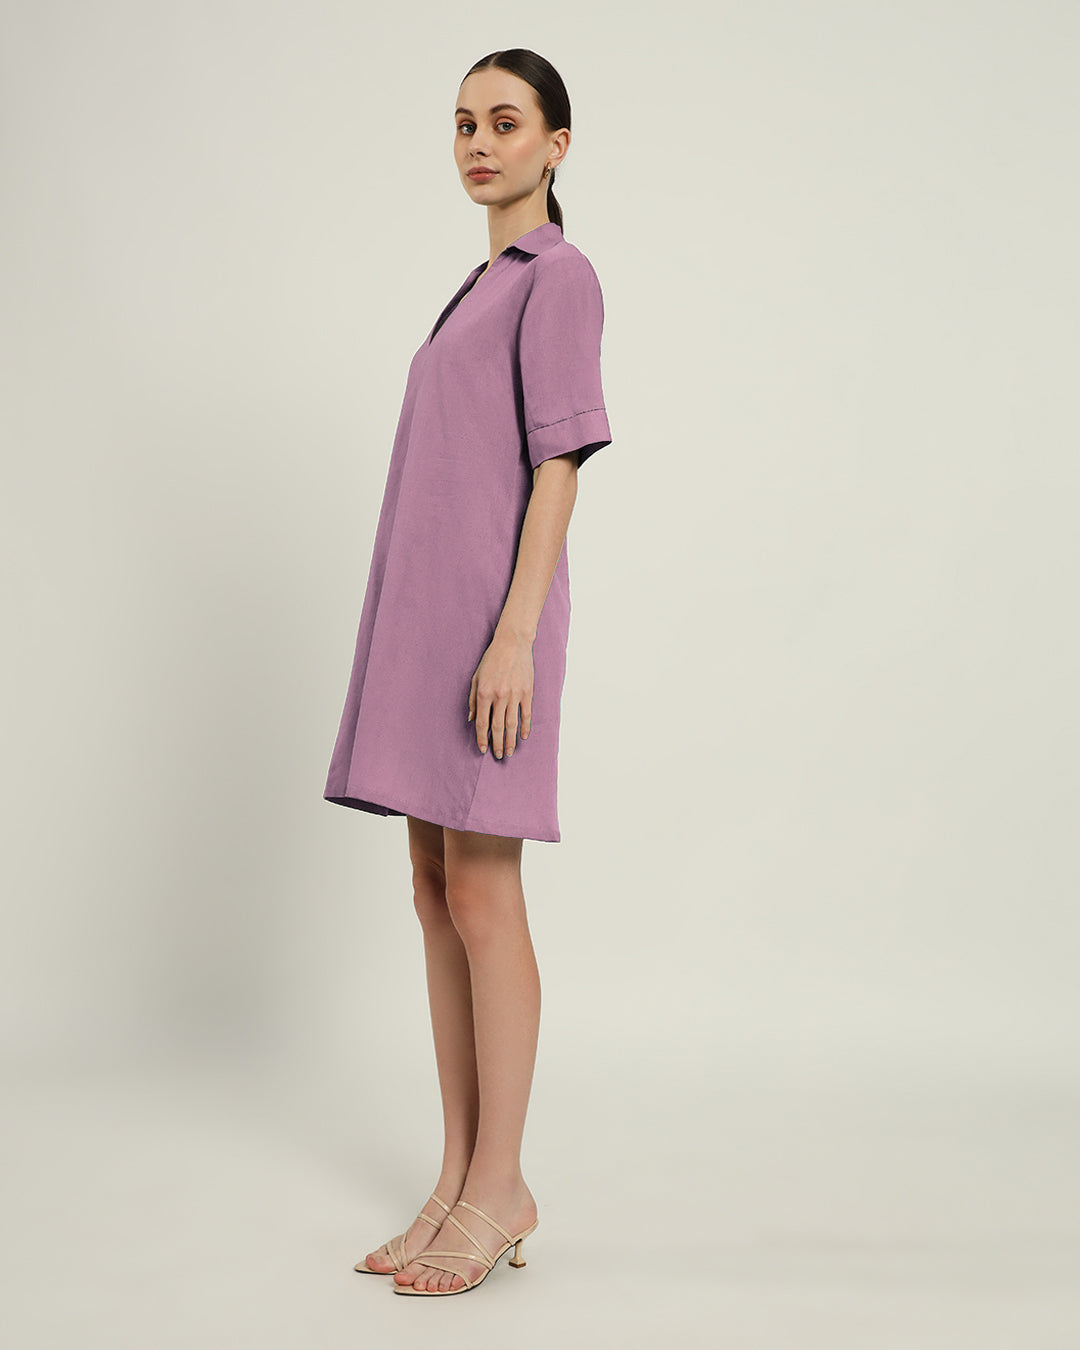 The Ermont Purple Swirl Cotton Dress